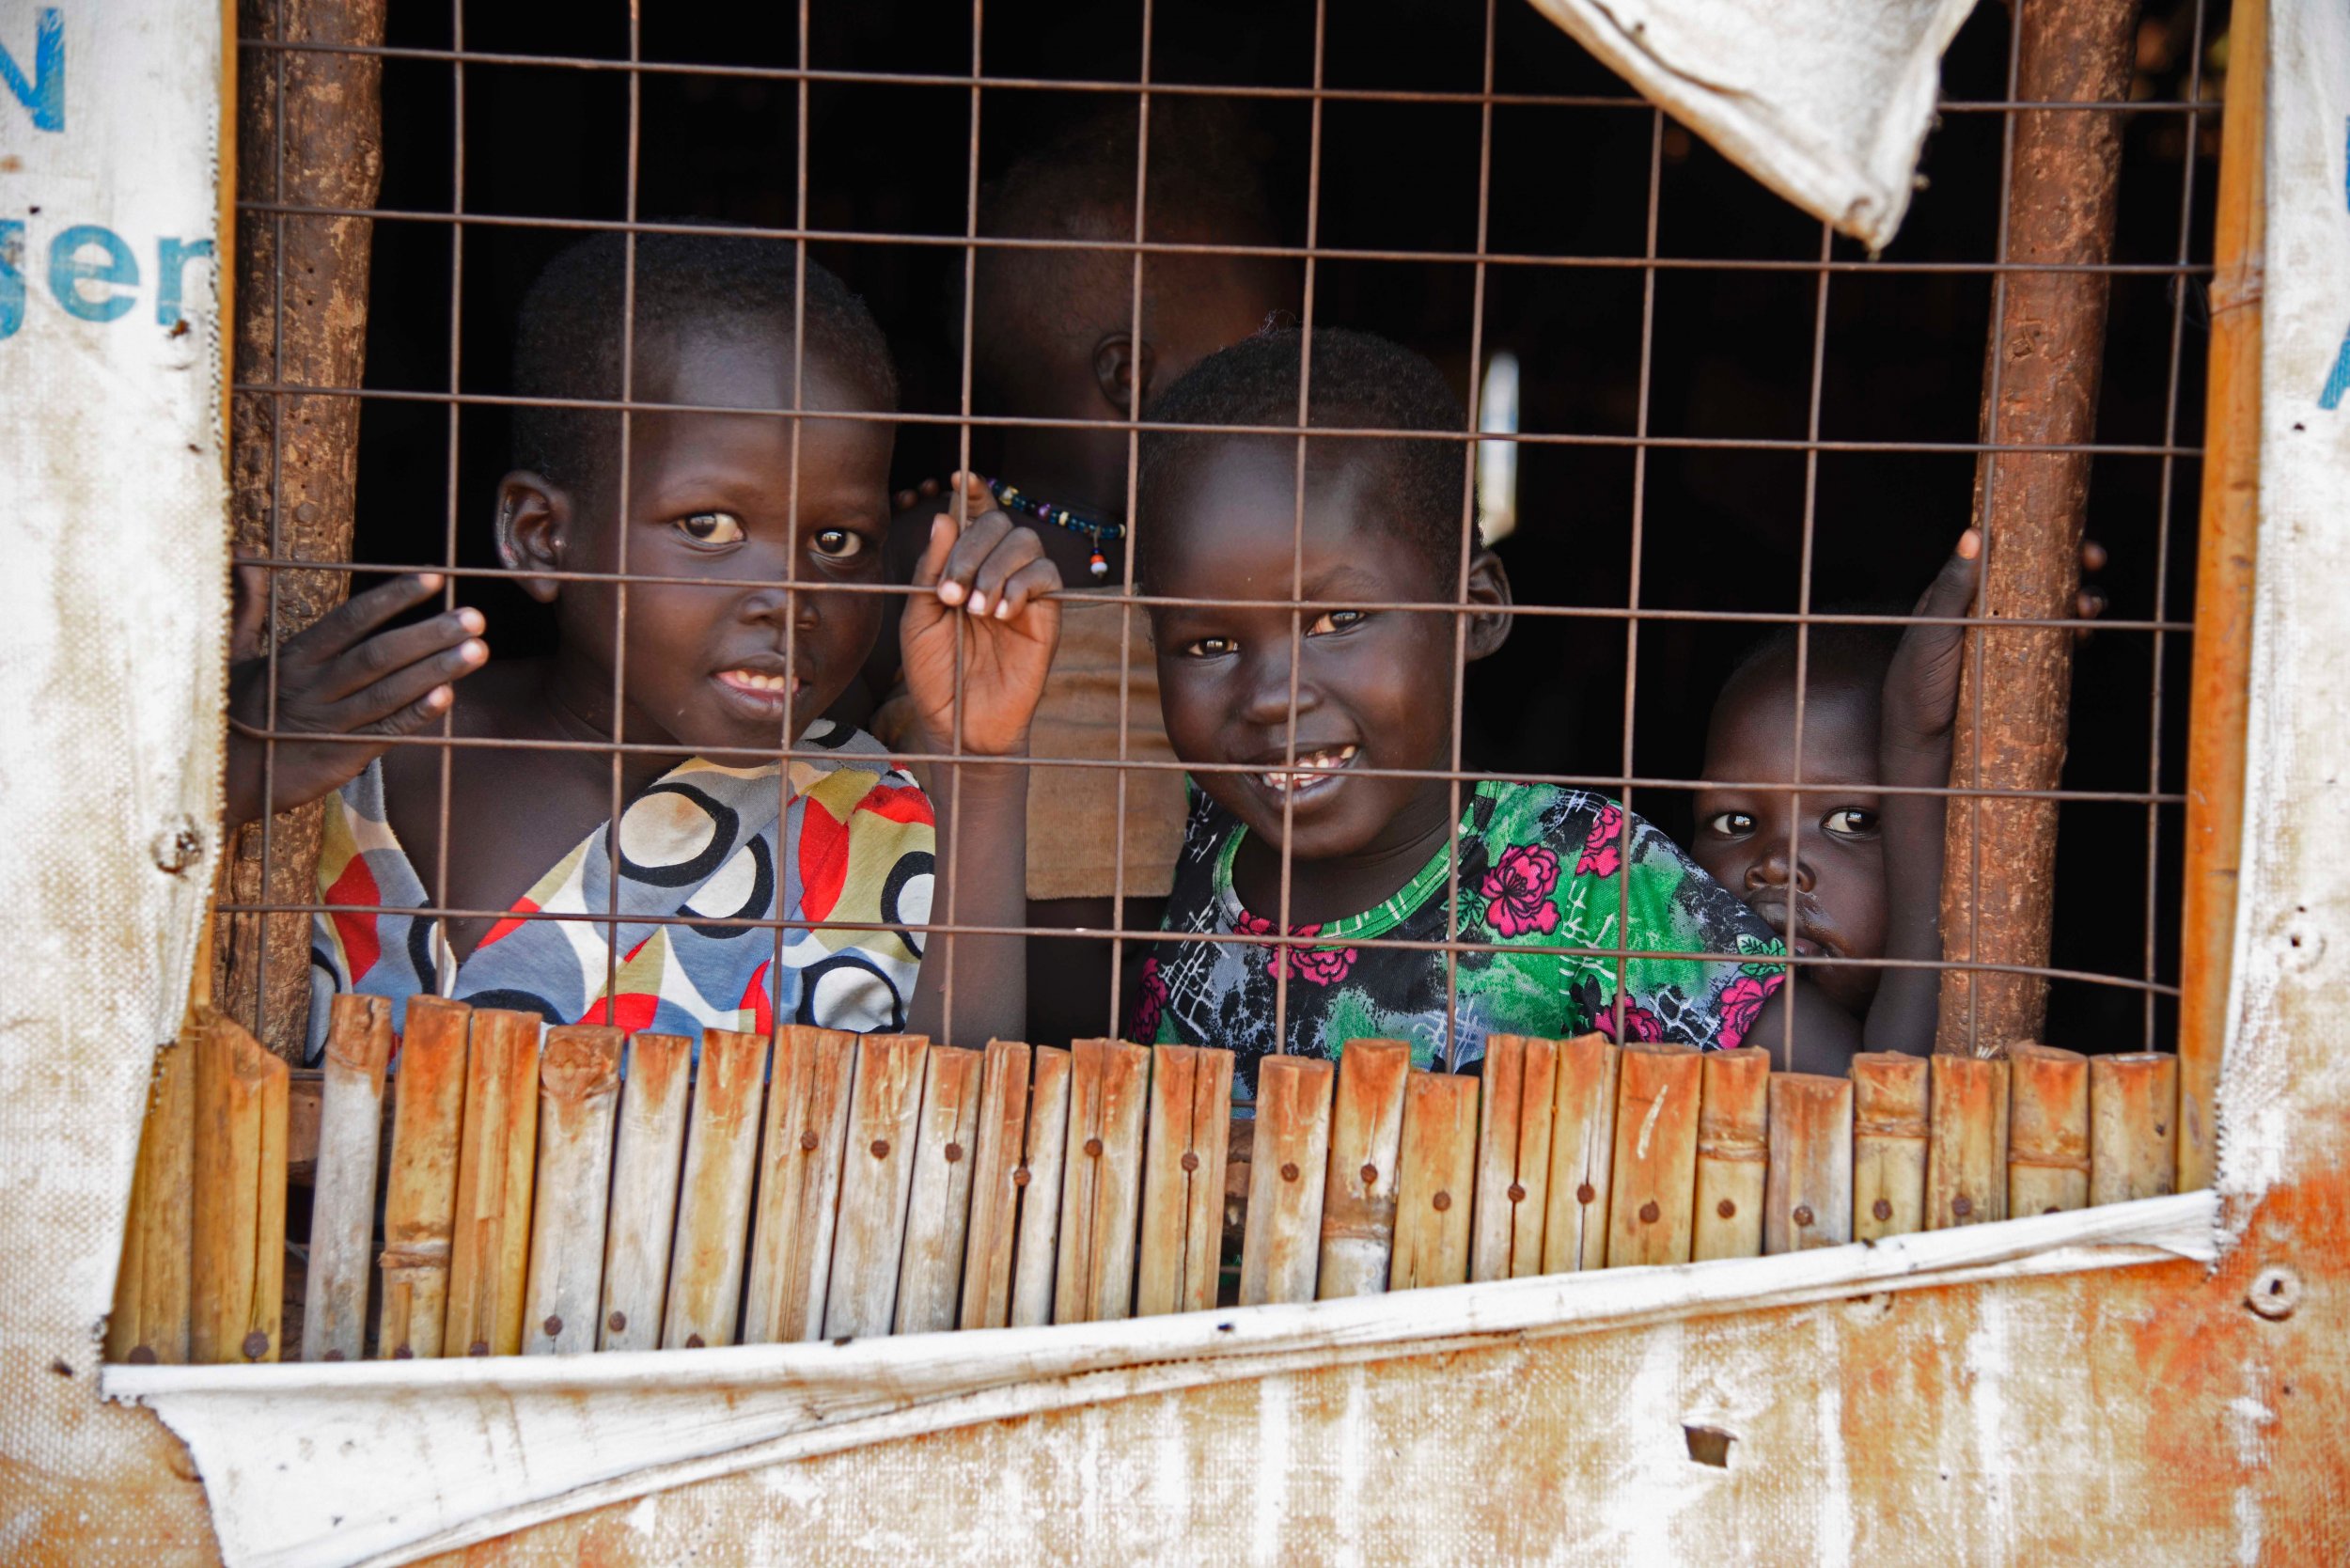 South Sudanese refugees in Uganda